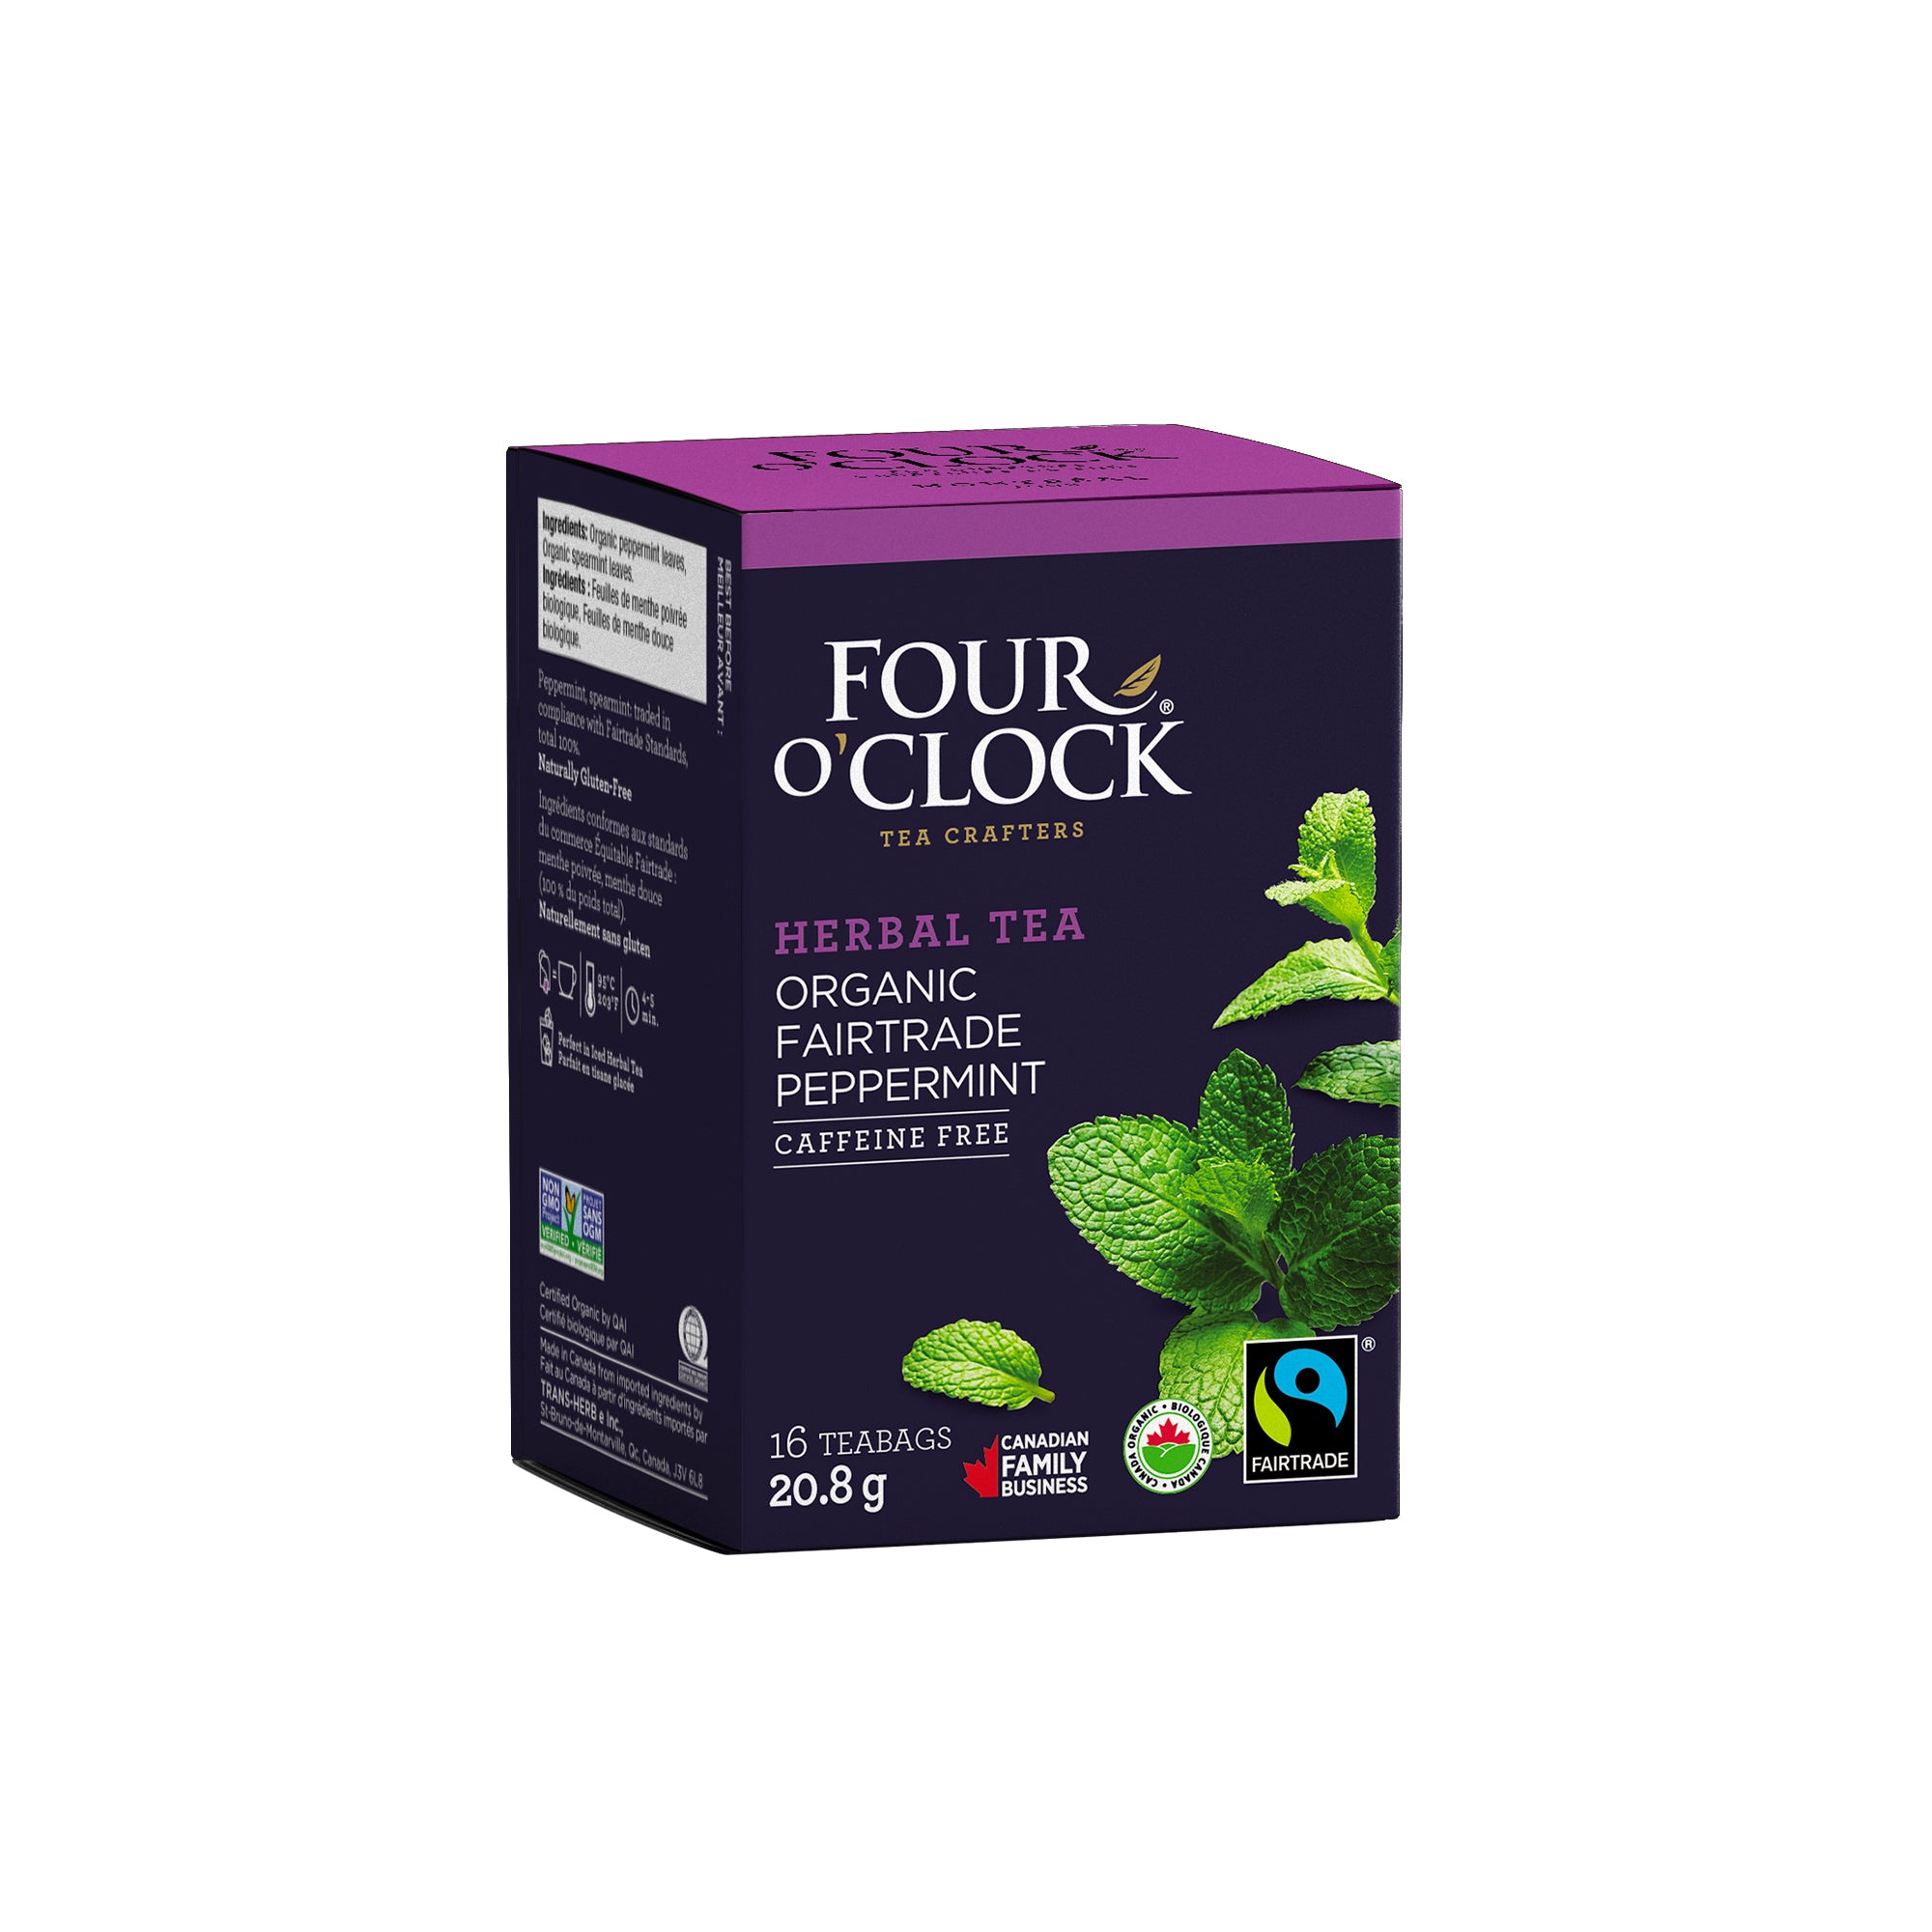 Peppermint Organic Fairtrade Herbal Tea